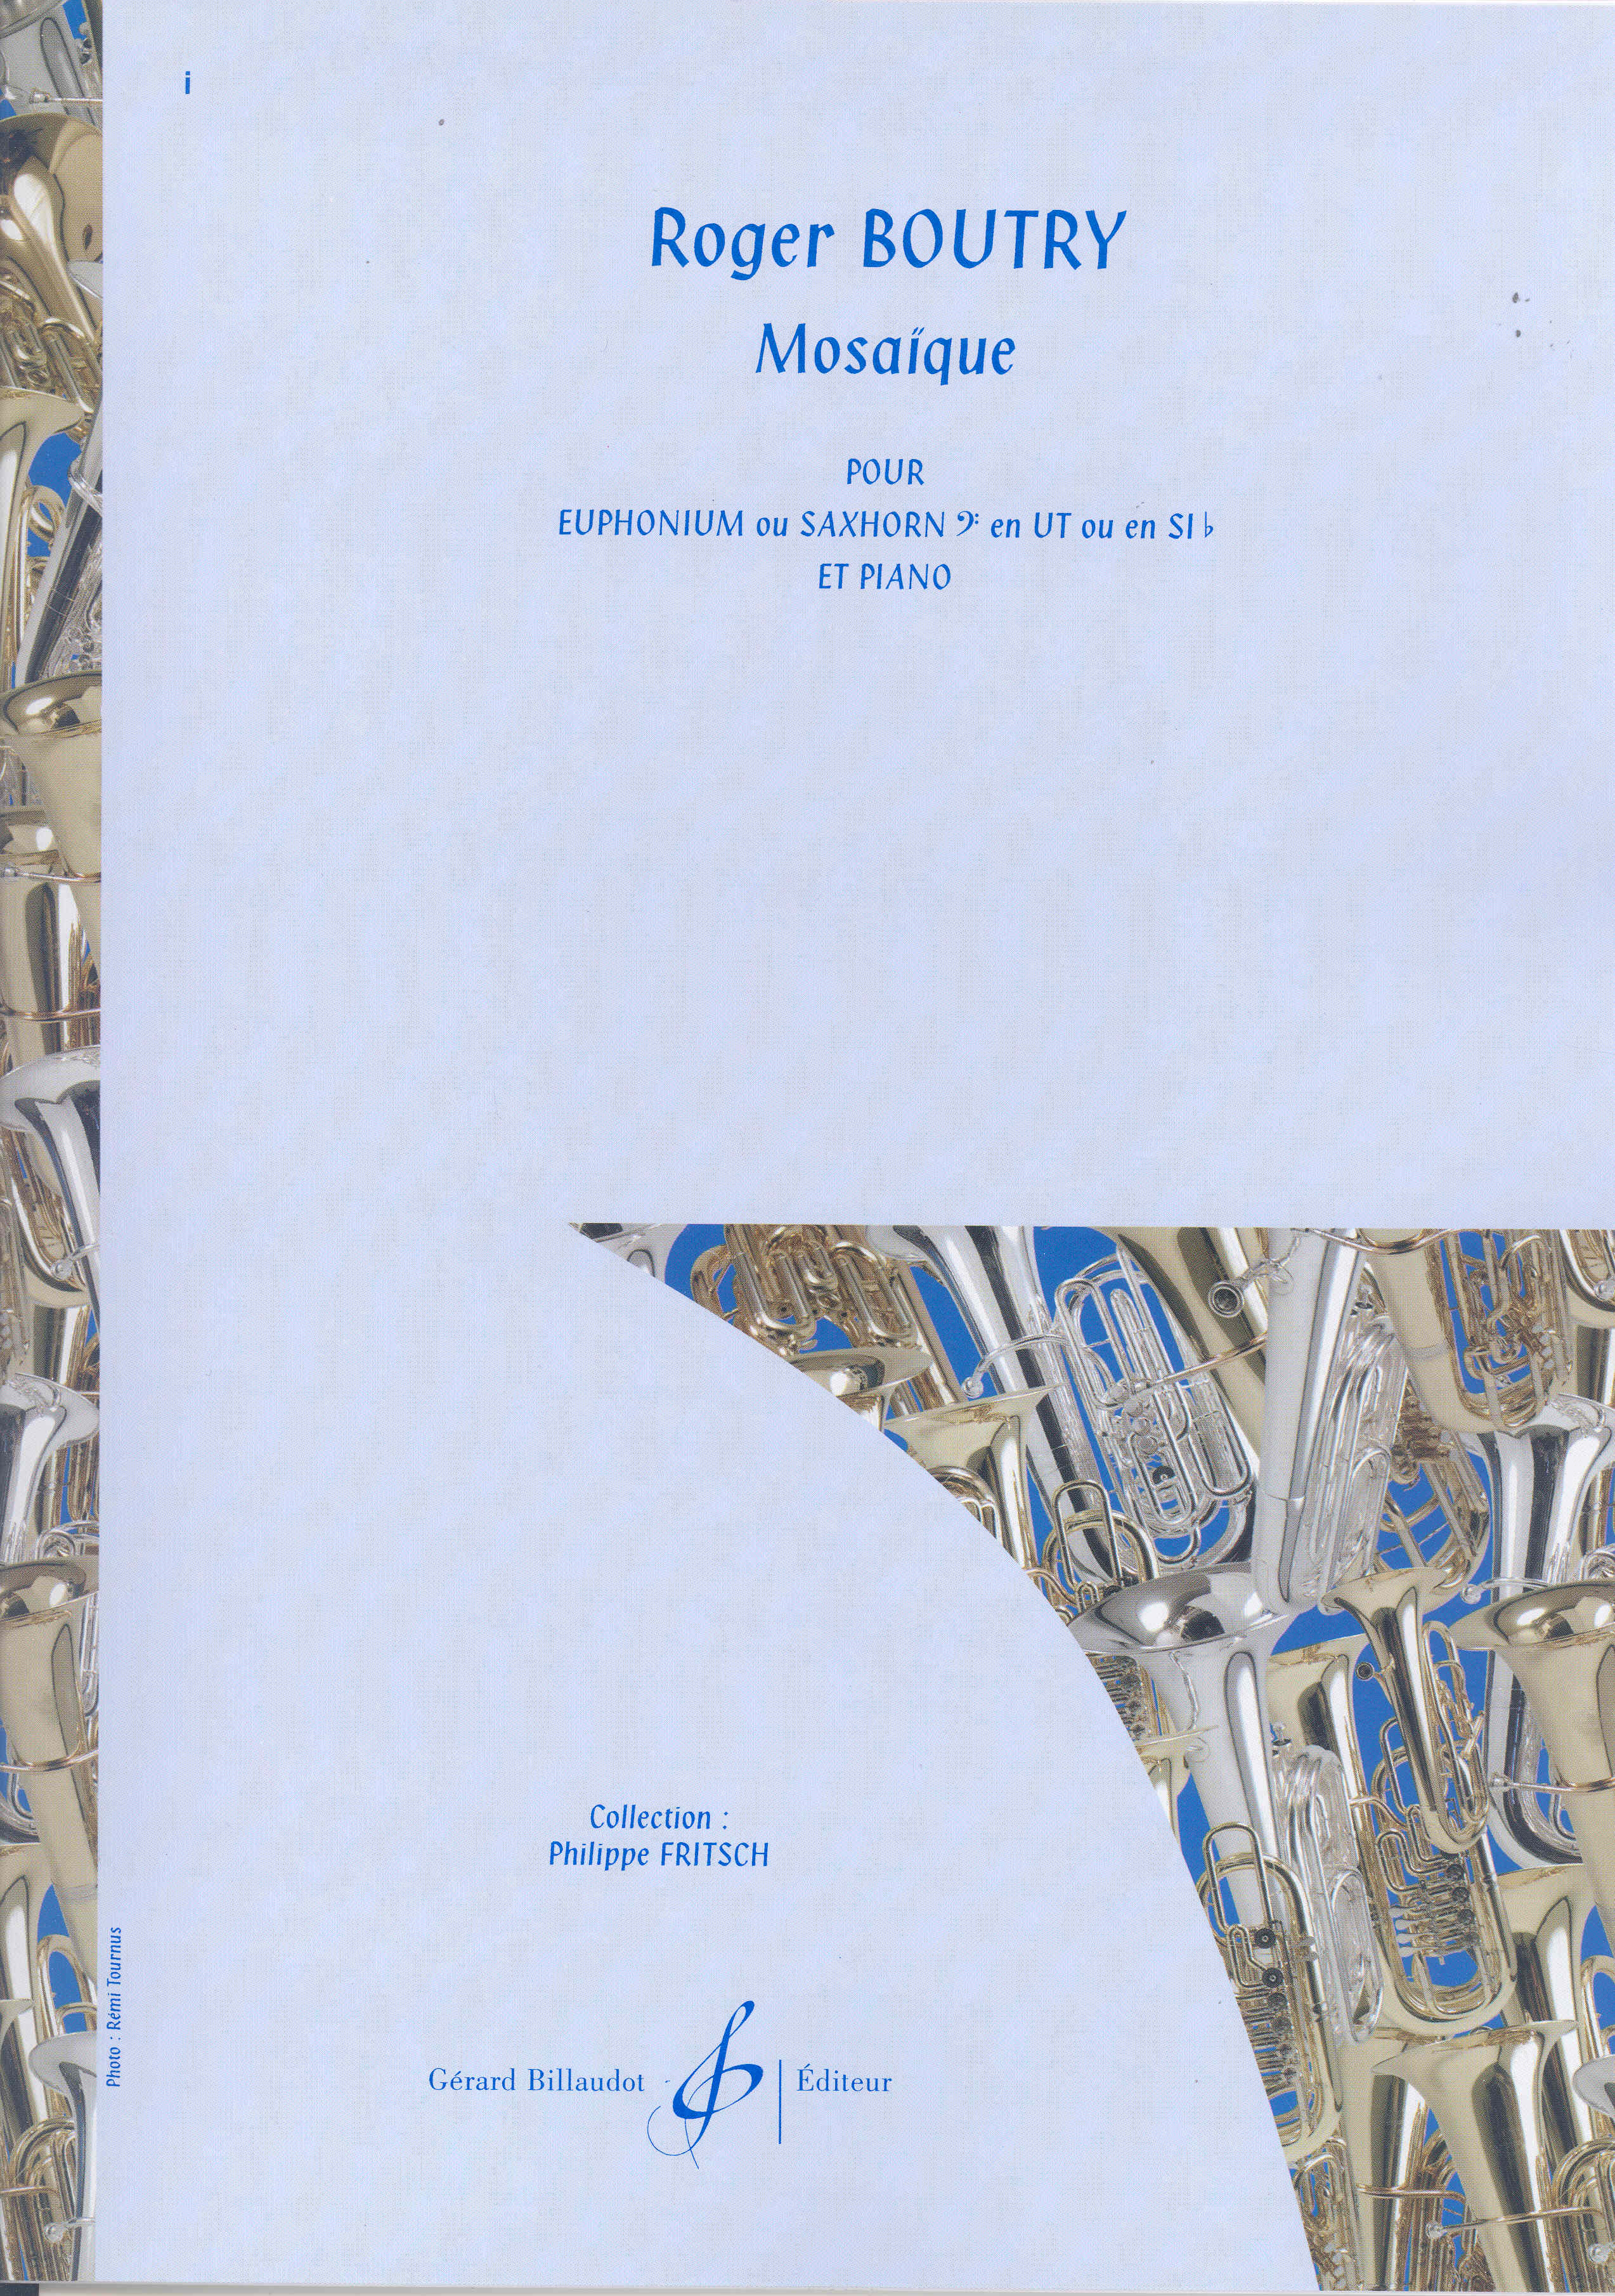 Boutry Mosaique Euphonium/saxhorn/tuba & Piano Sheet Music Songbook